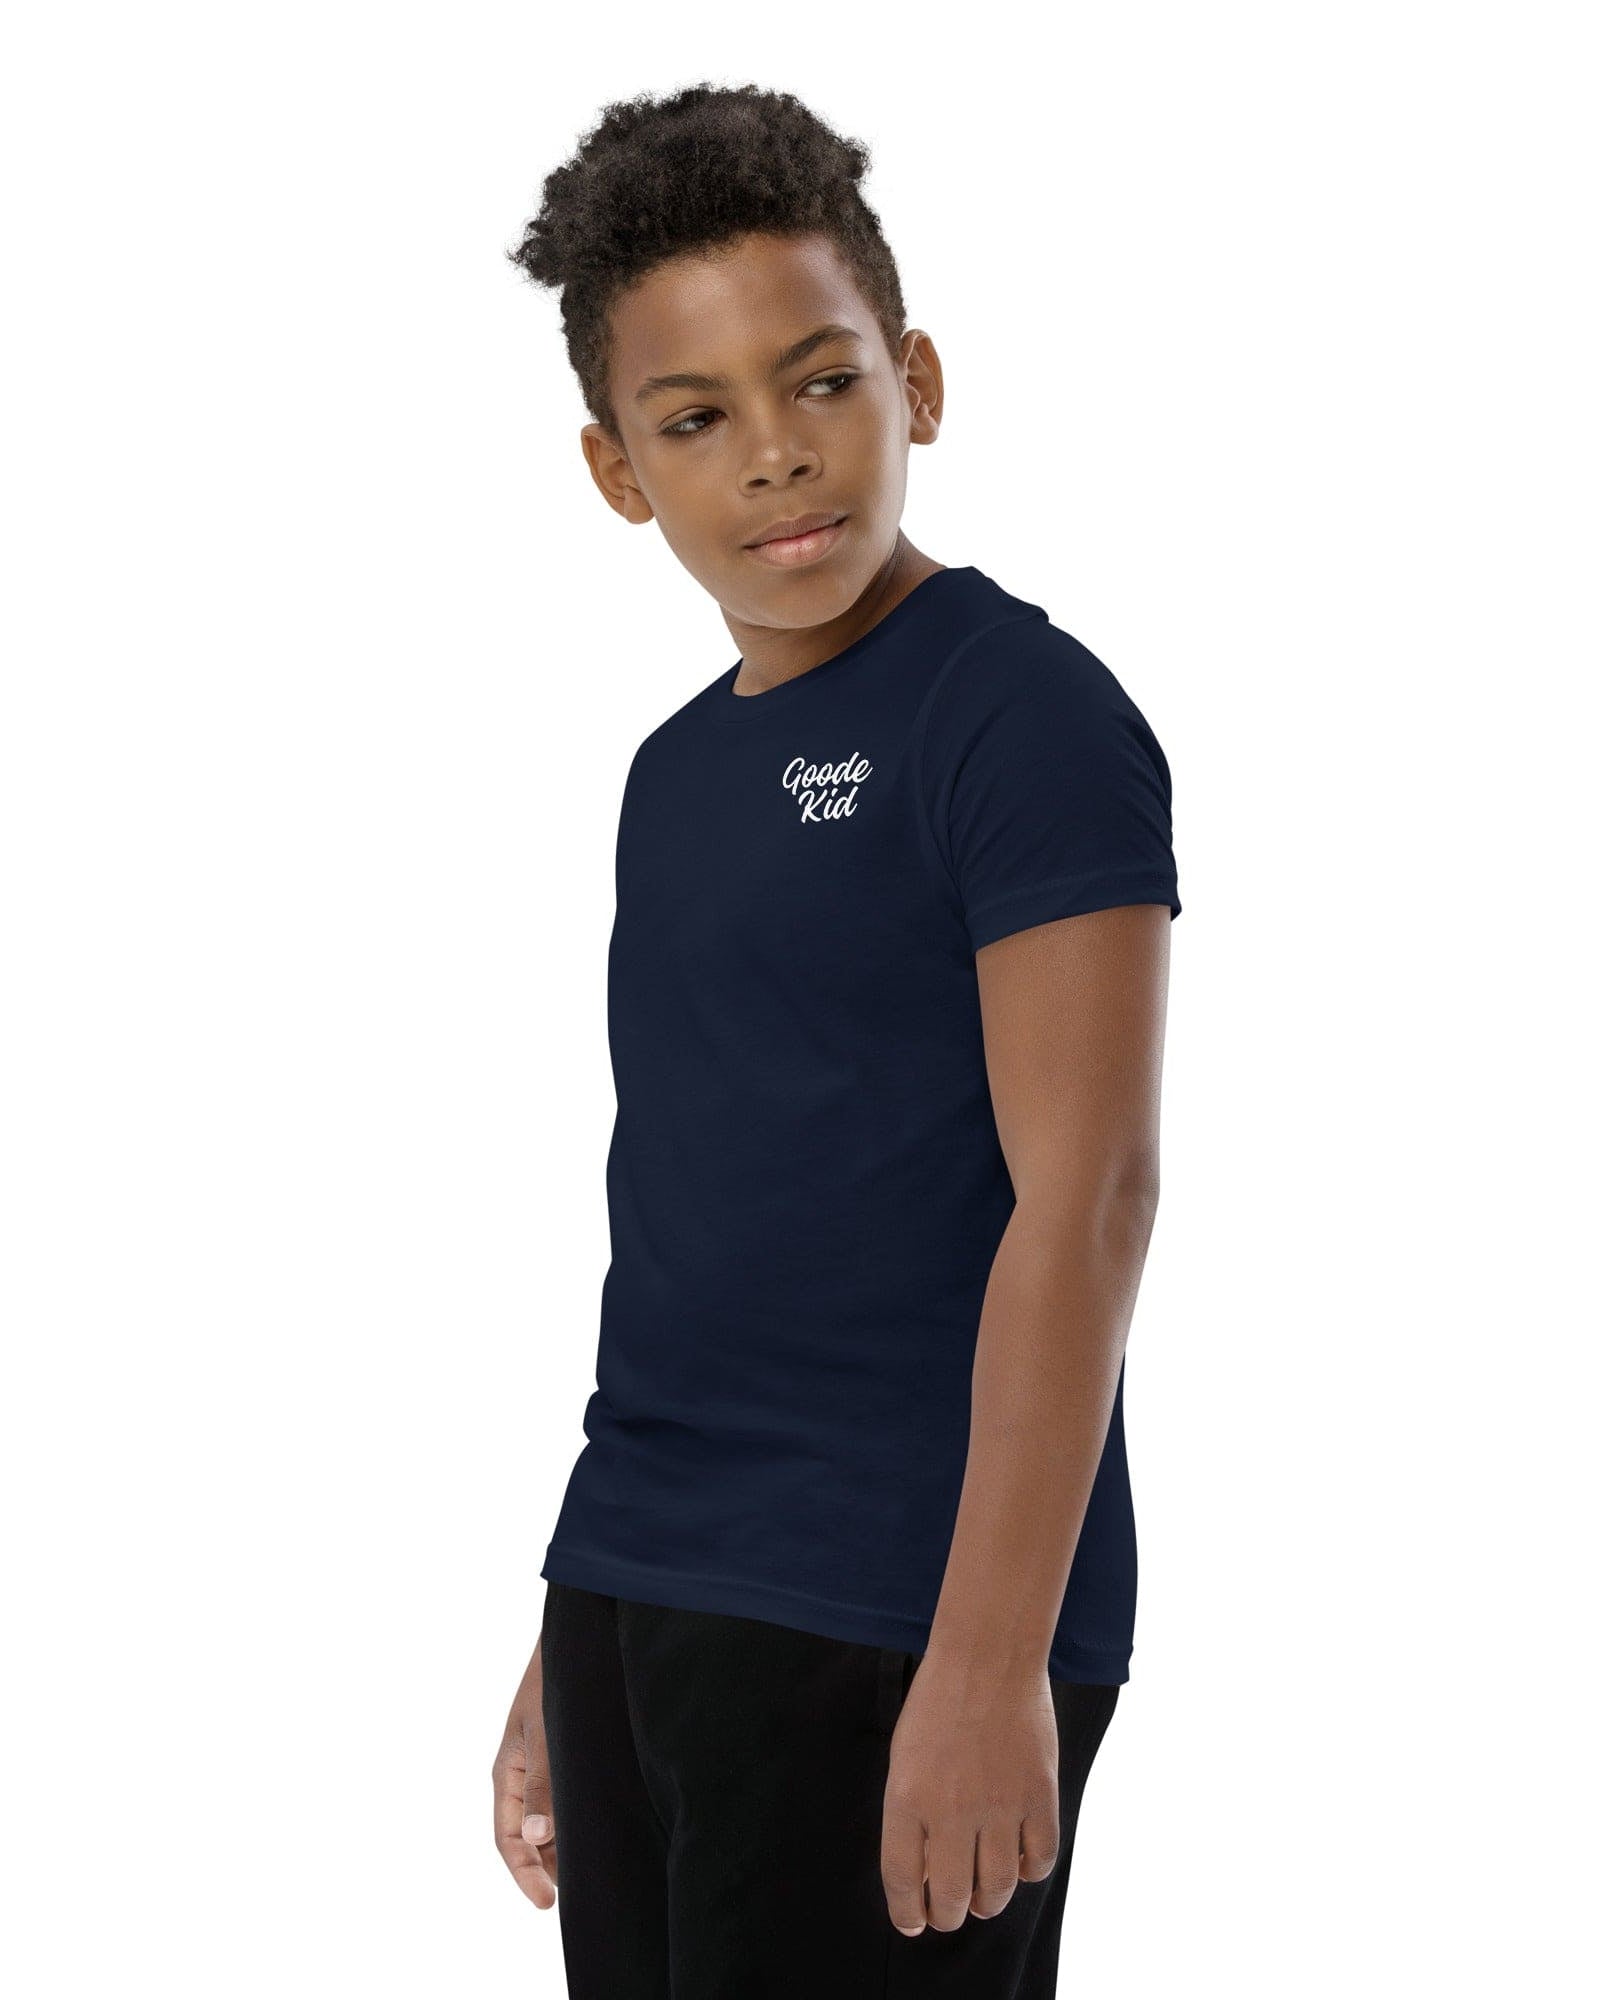 Goode Kid T-shirt | Youth kids t-shirts Jolly & Goode